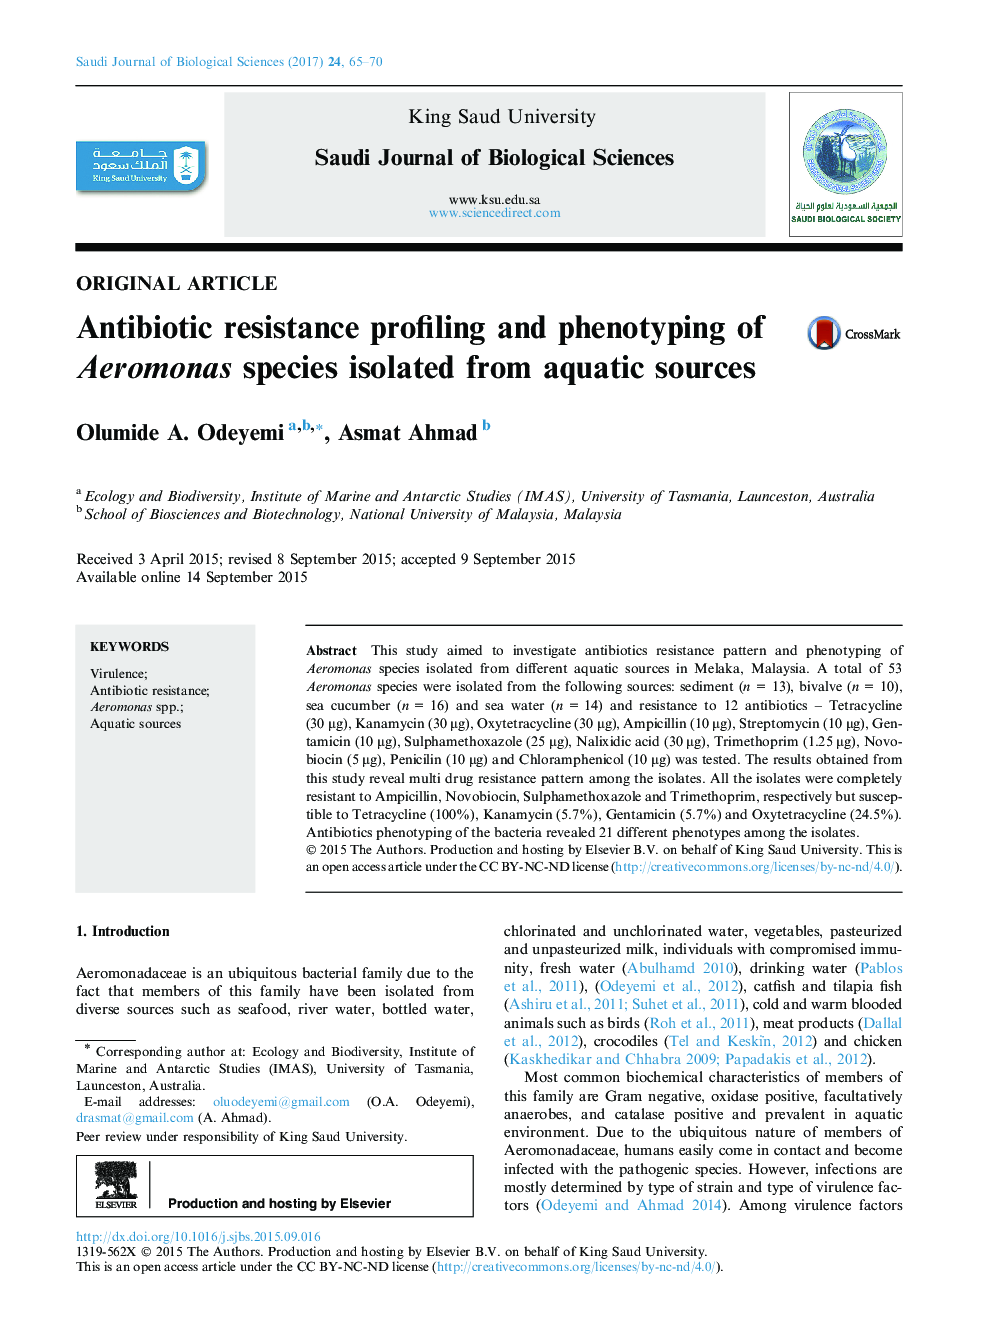 Original articleAntibiotic resistance profiling and phenotyping of Aeromonas species isolated from aquatic sources